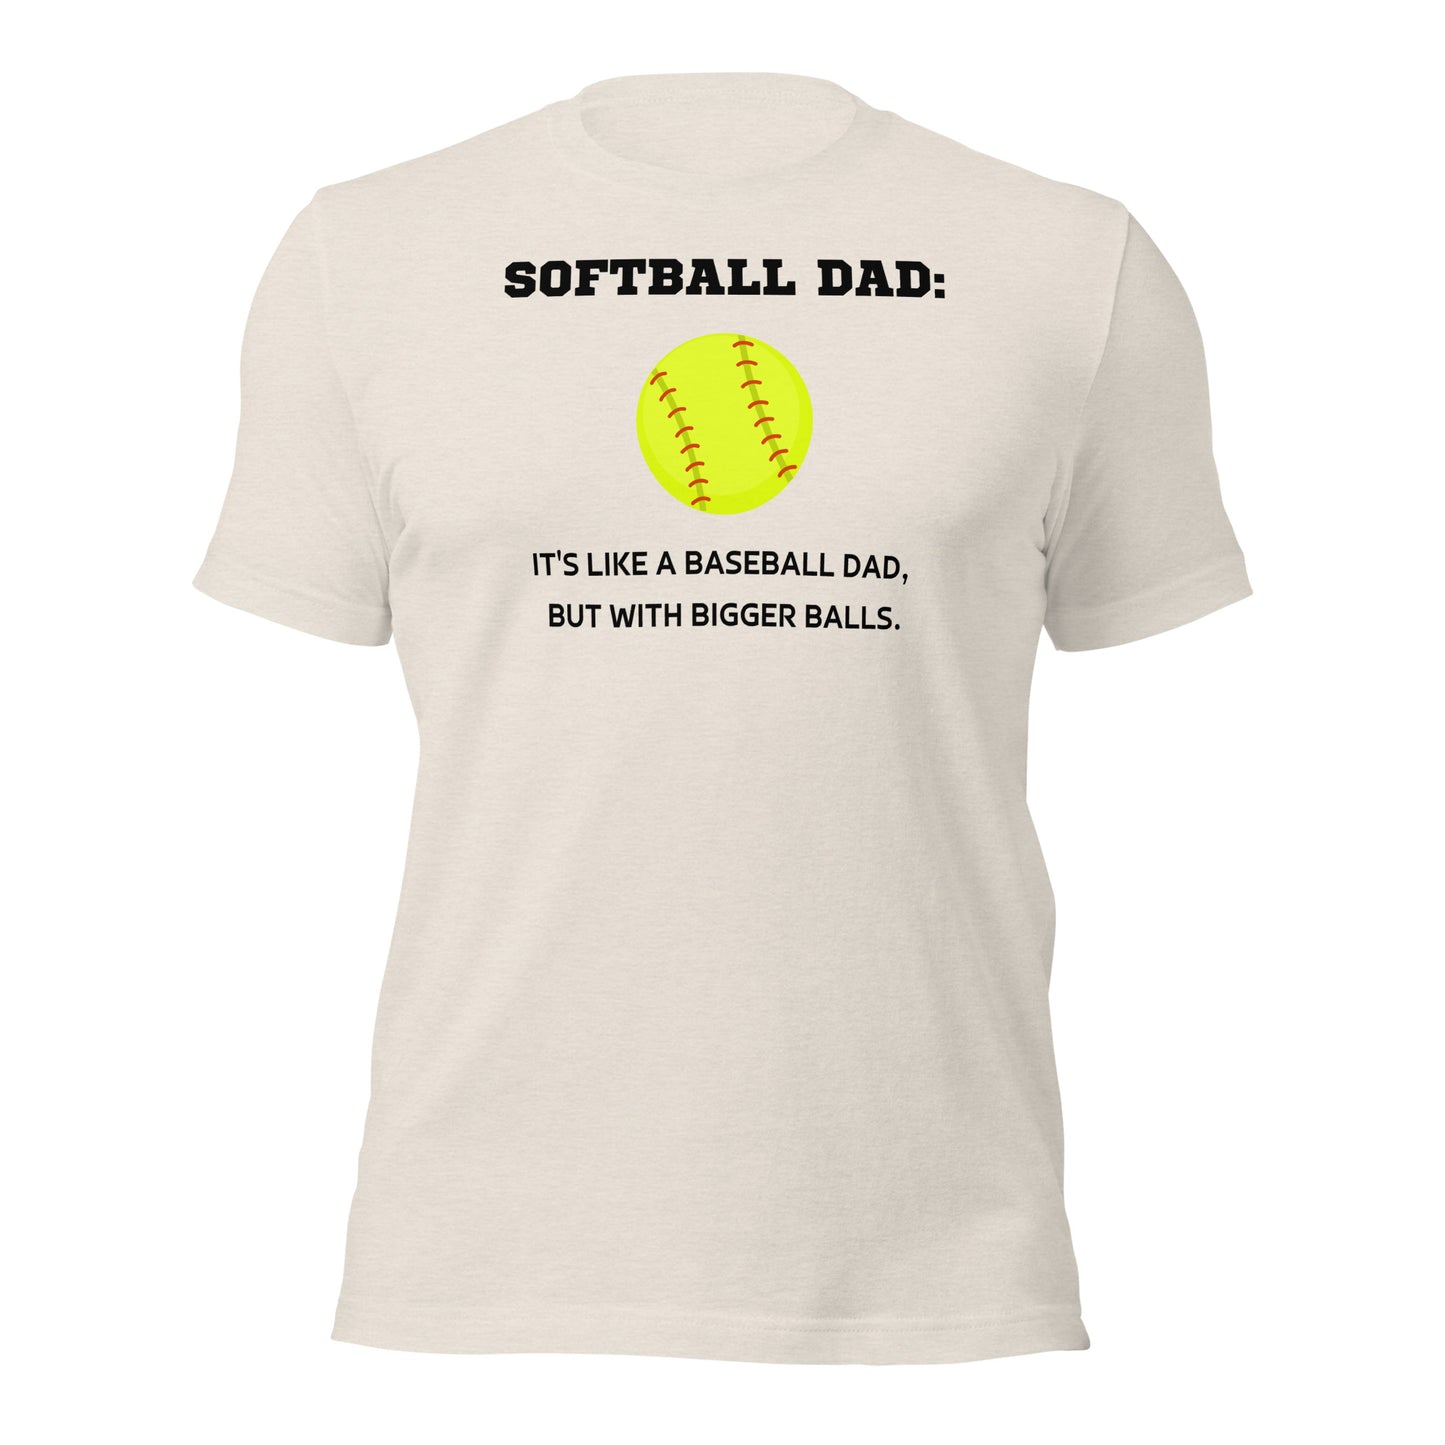 Softball Dad t-shirt